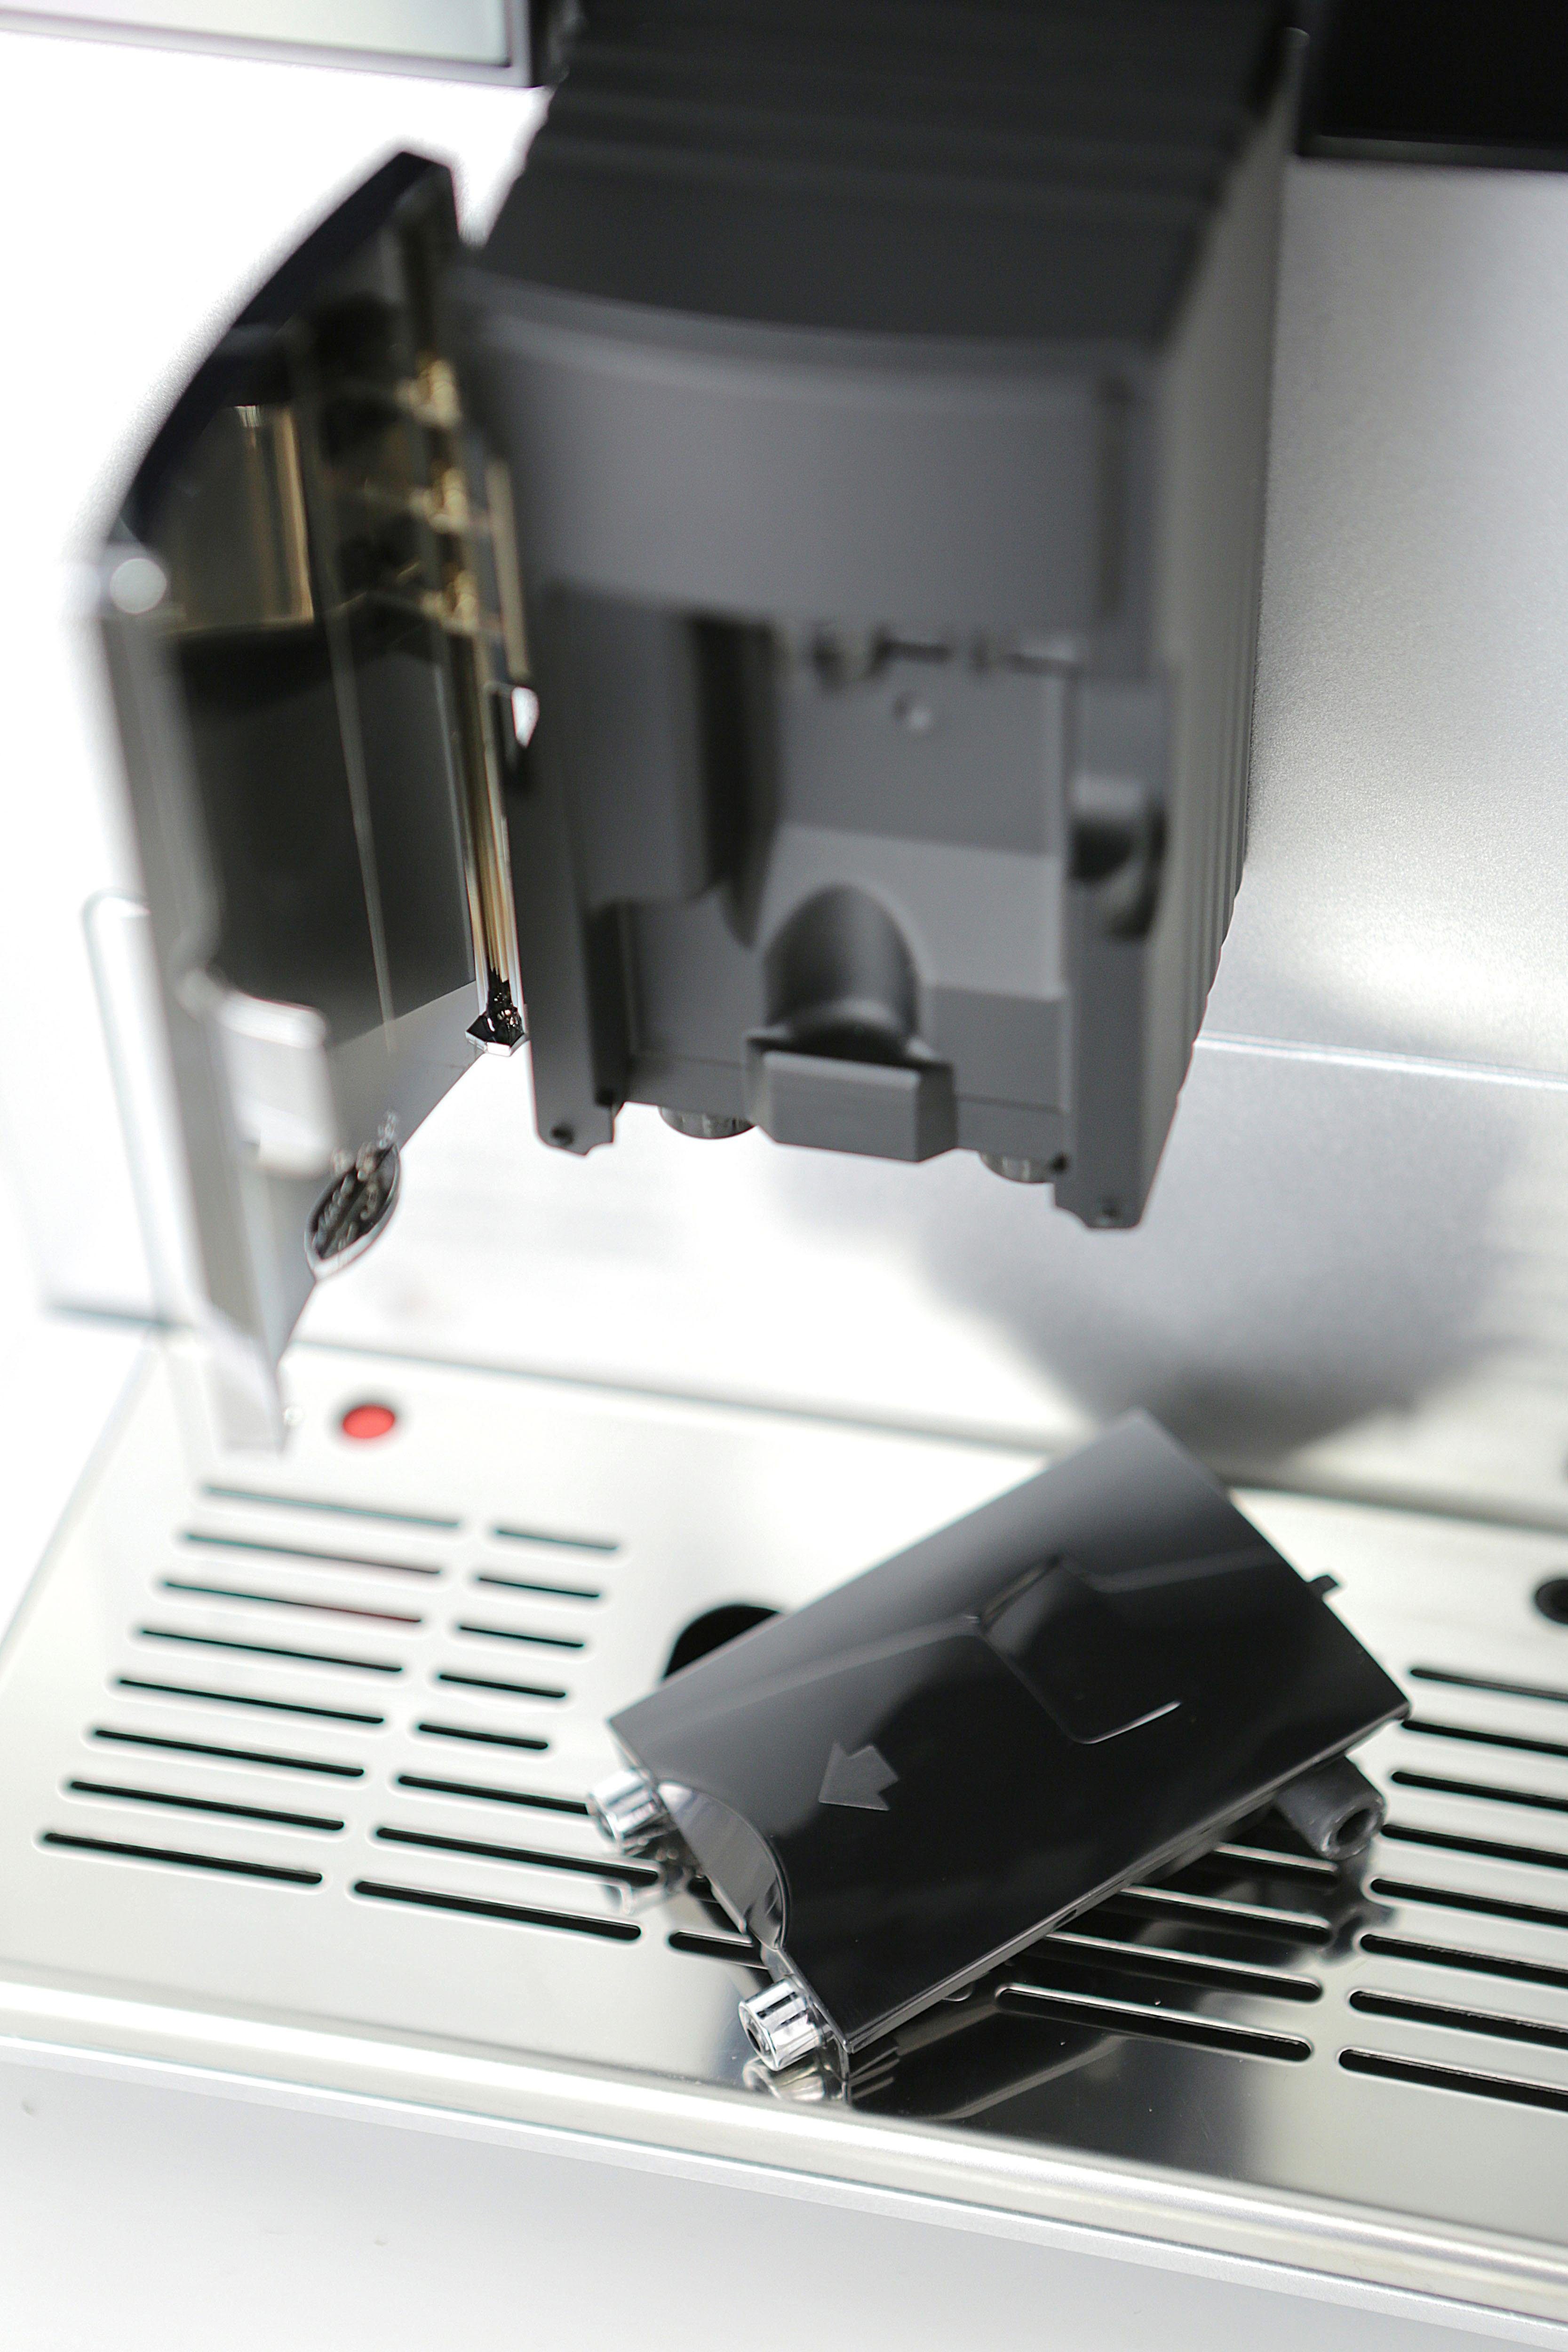 F630-101, mit Mahlwerk & silber, Bedienoberfläche Melitta CI Funktion Touch® Slide Flüsterleises Touch Kaffeevollautomat